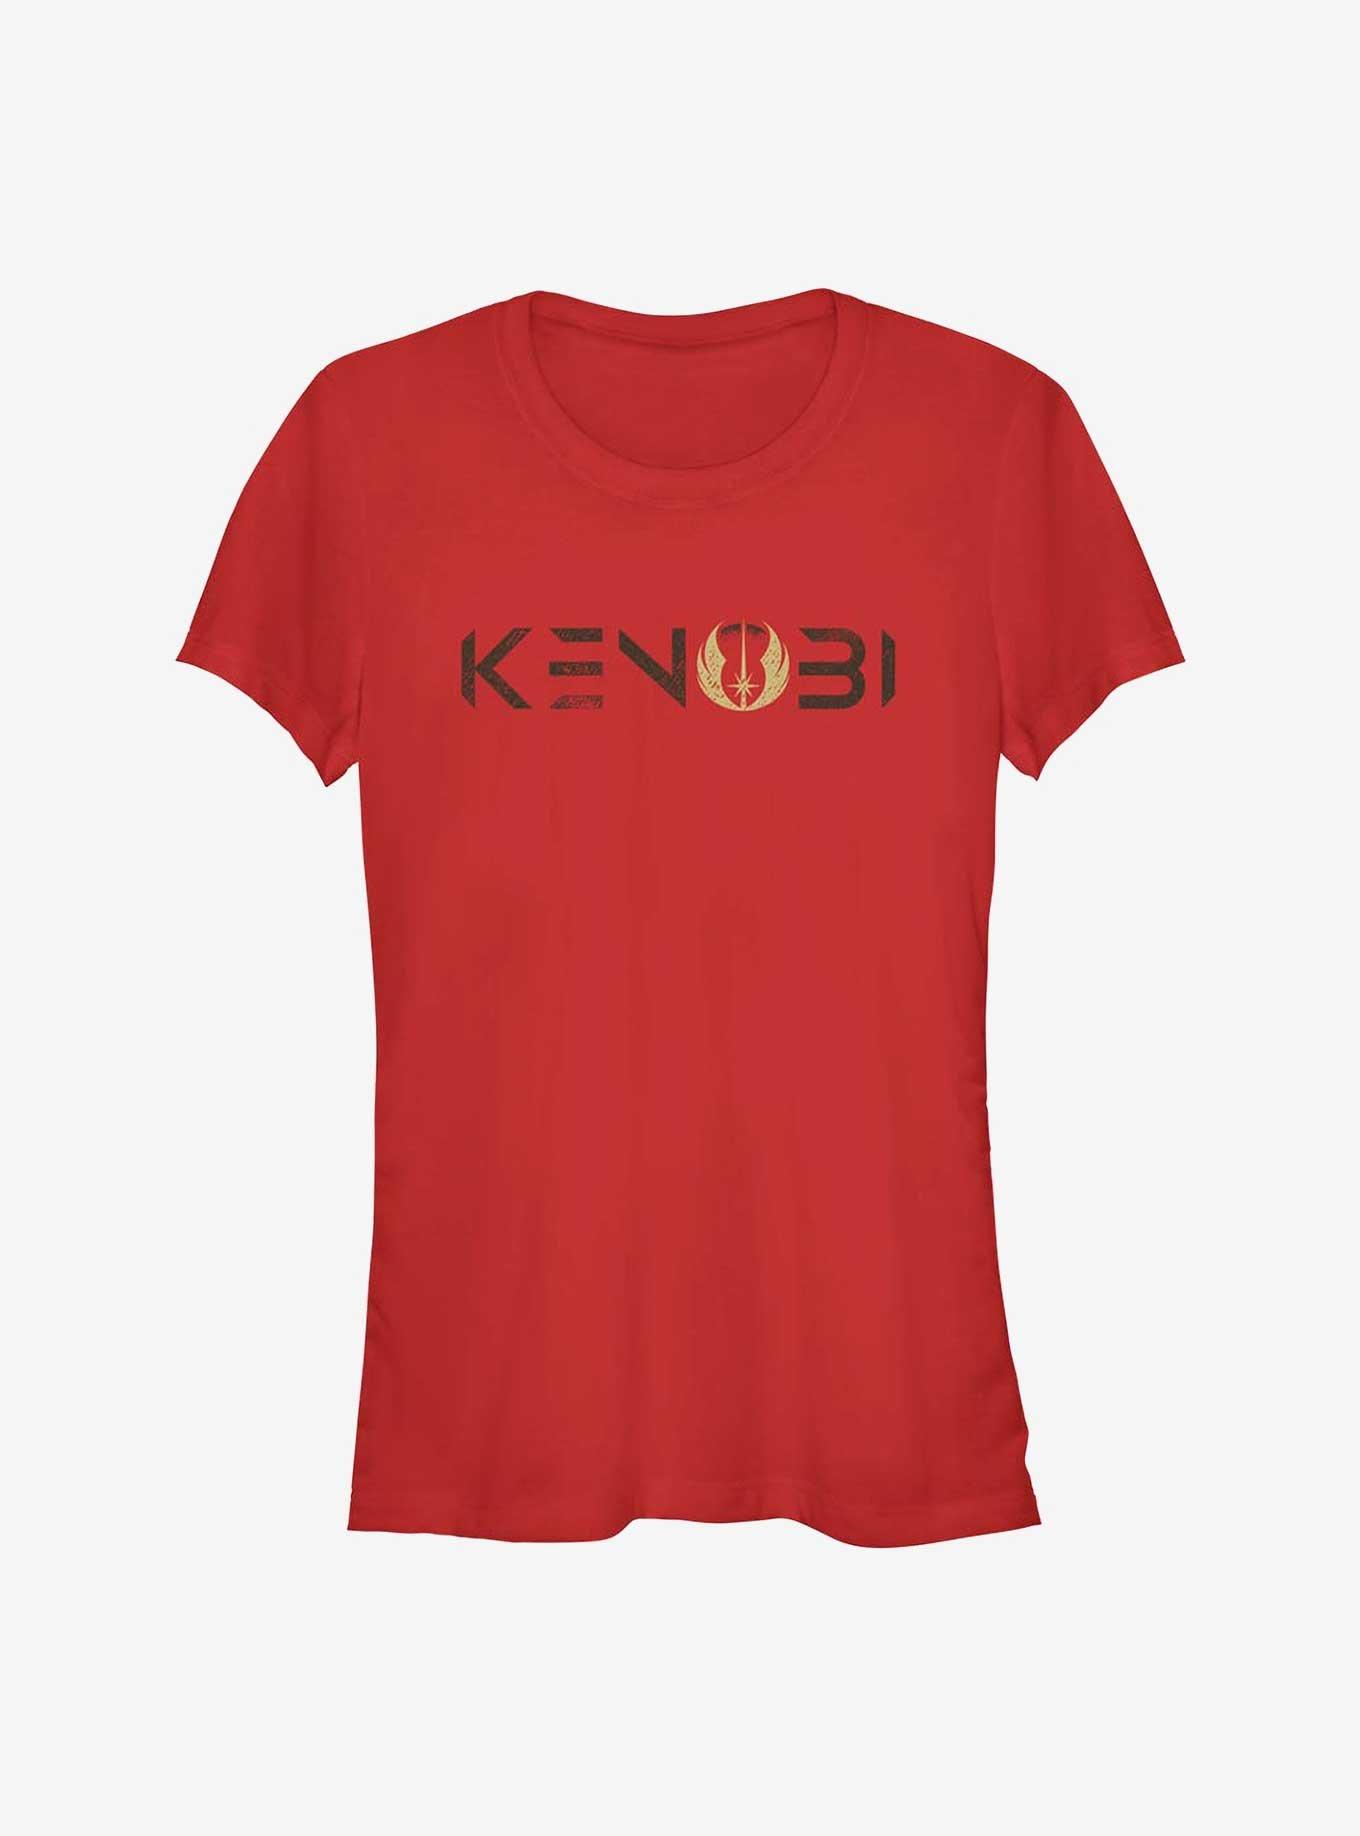 Star Wars Obi-Wan Kenobi Jedi Crest Logo Girls T-Shirt, RED, hi-res